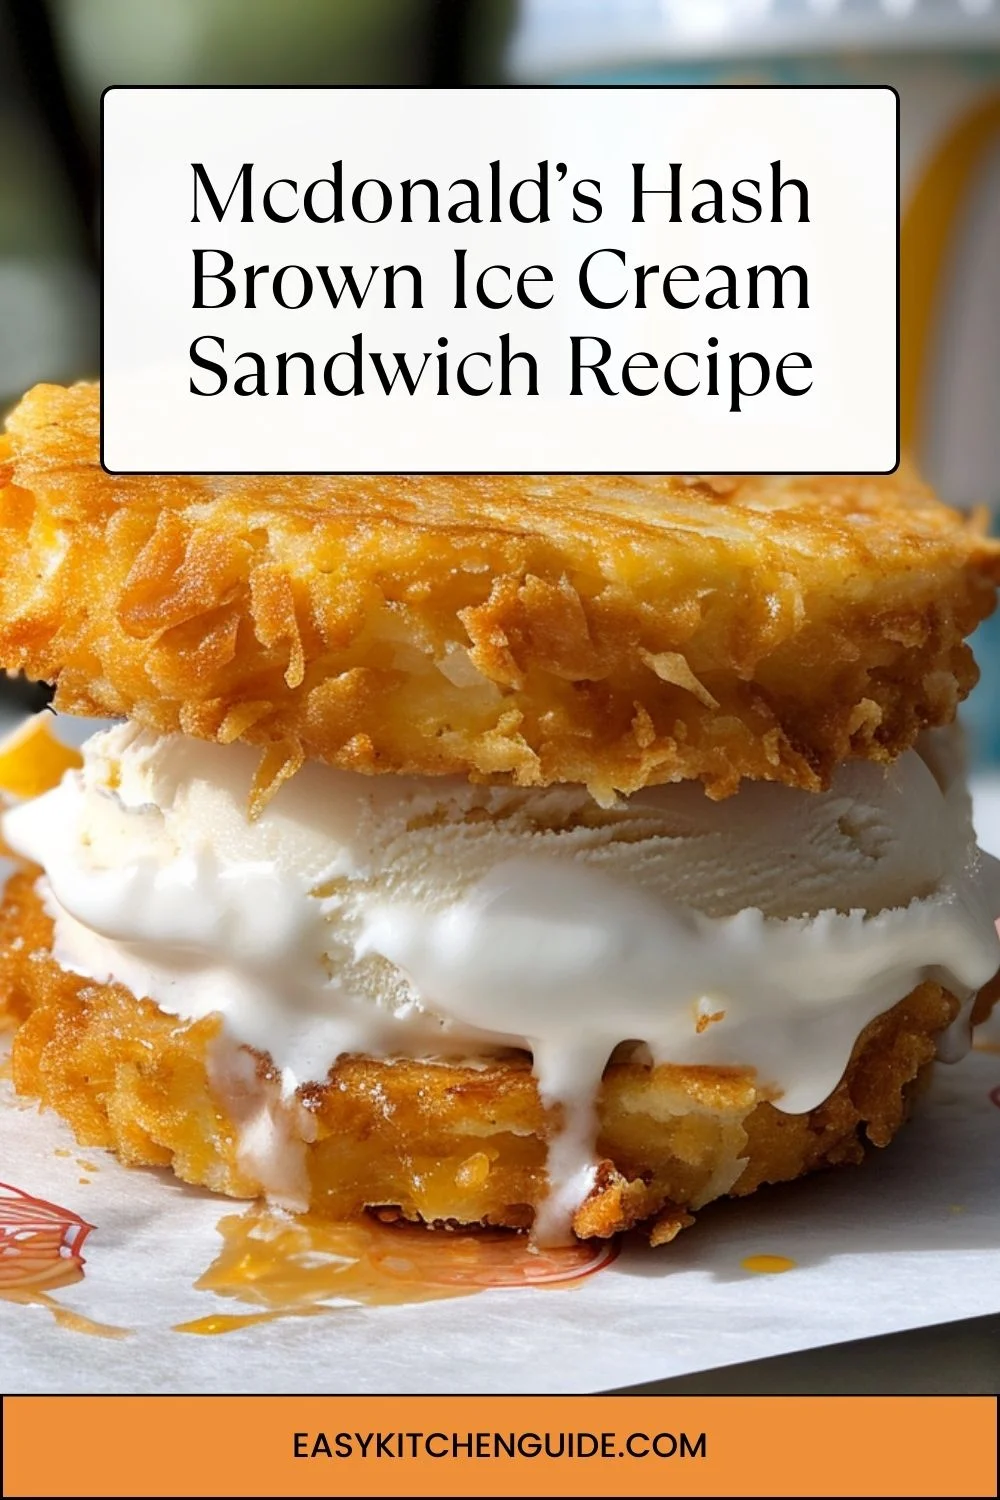 Mcdonald’s Hash Brown Ice Cream Sandwich Recipe